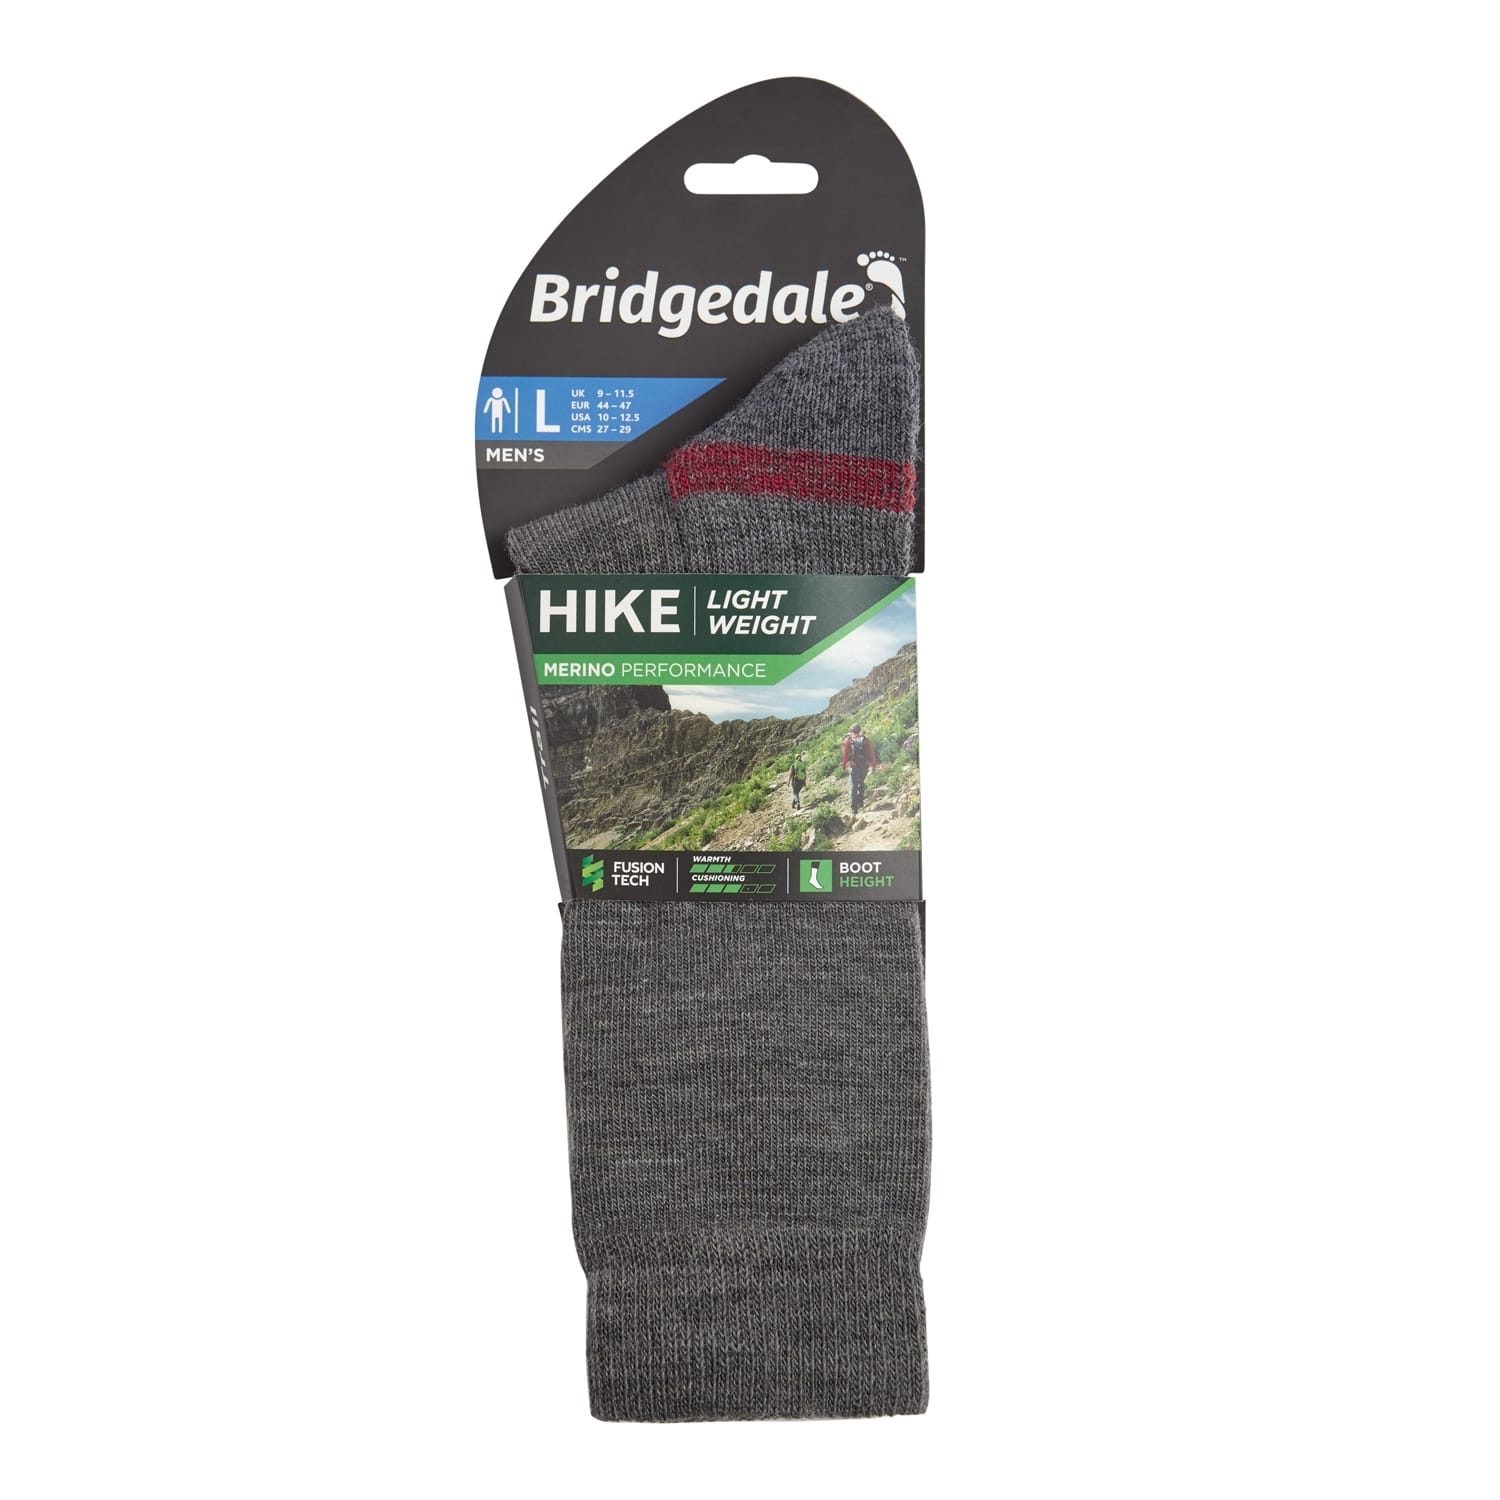 Bridgedale Men's Hike Lightweight Merino Endurance - Boot Height